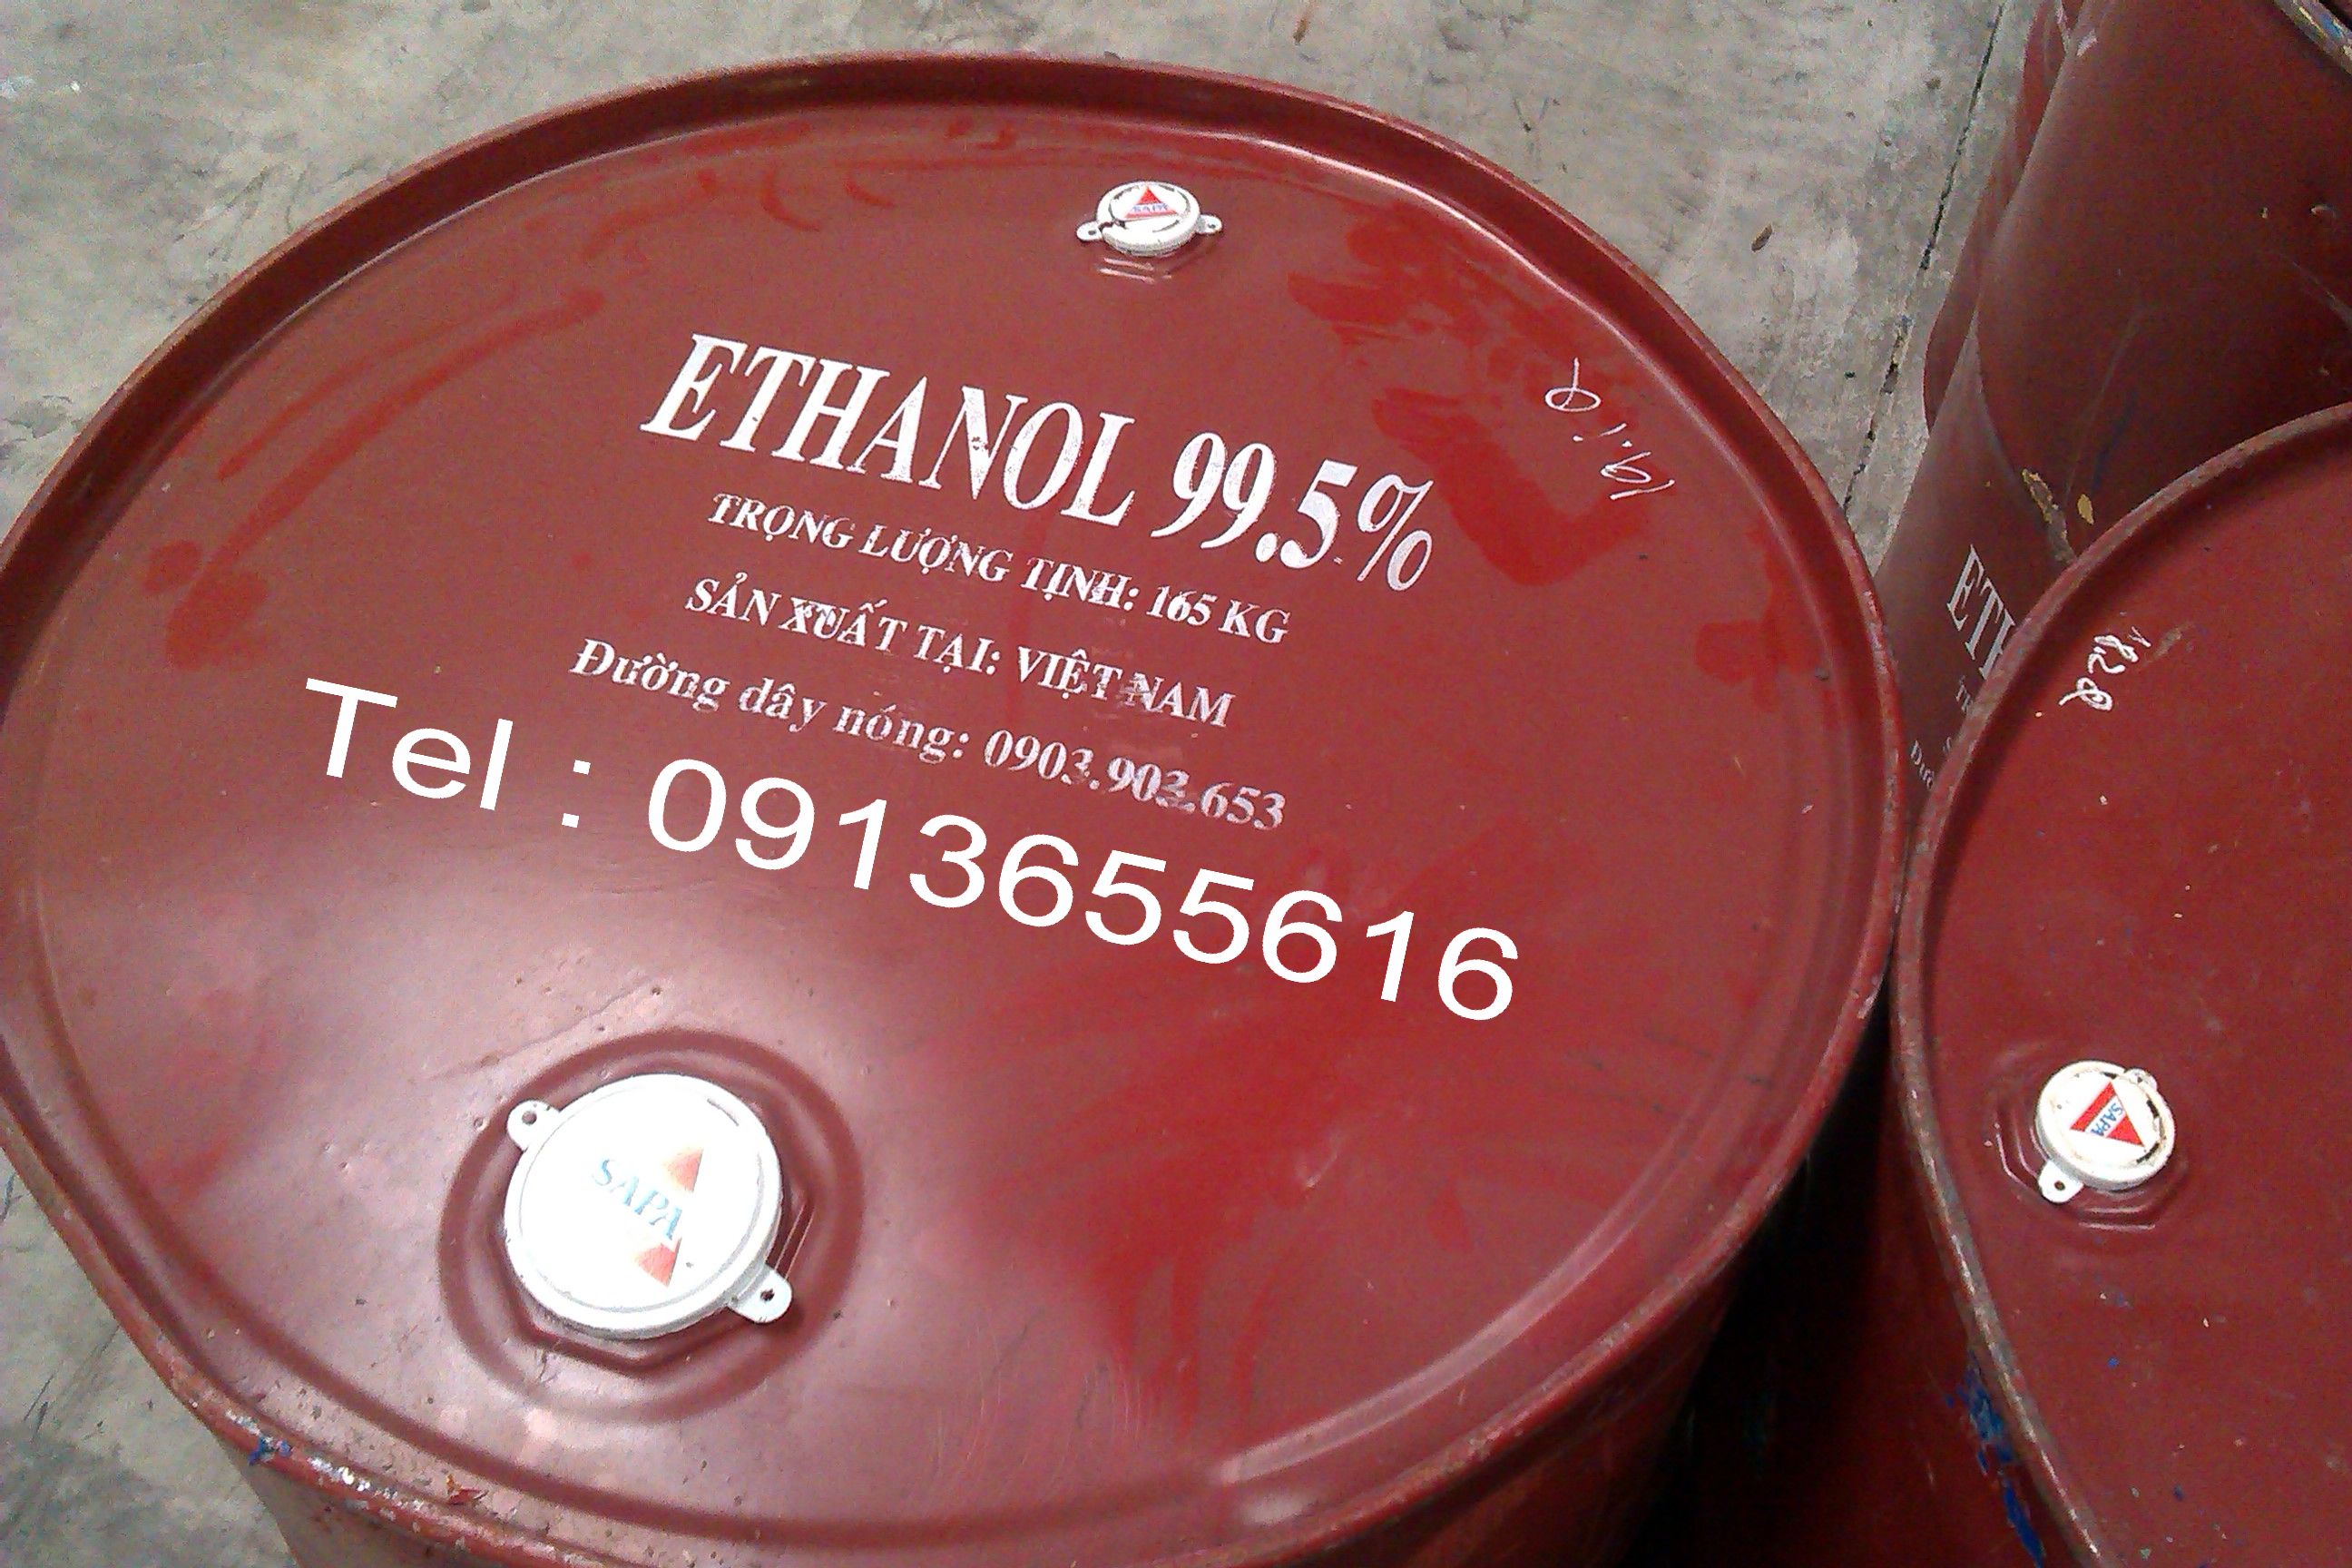 Ethanol 99,5